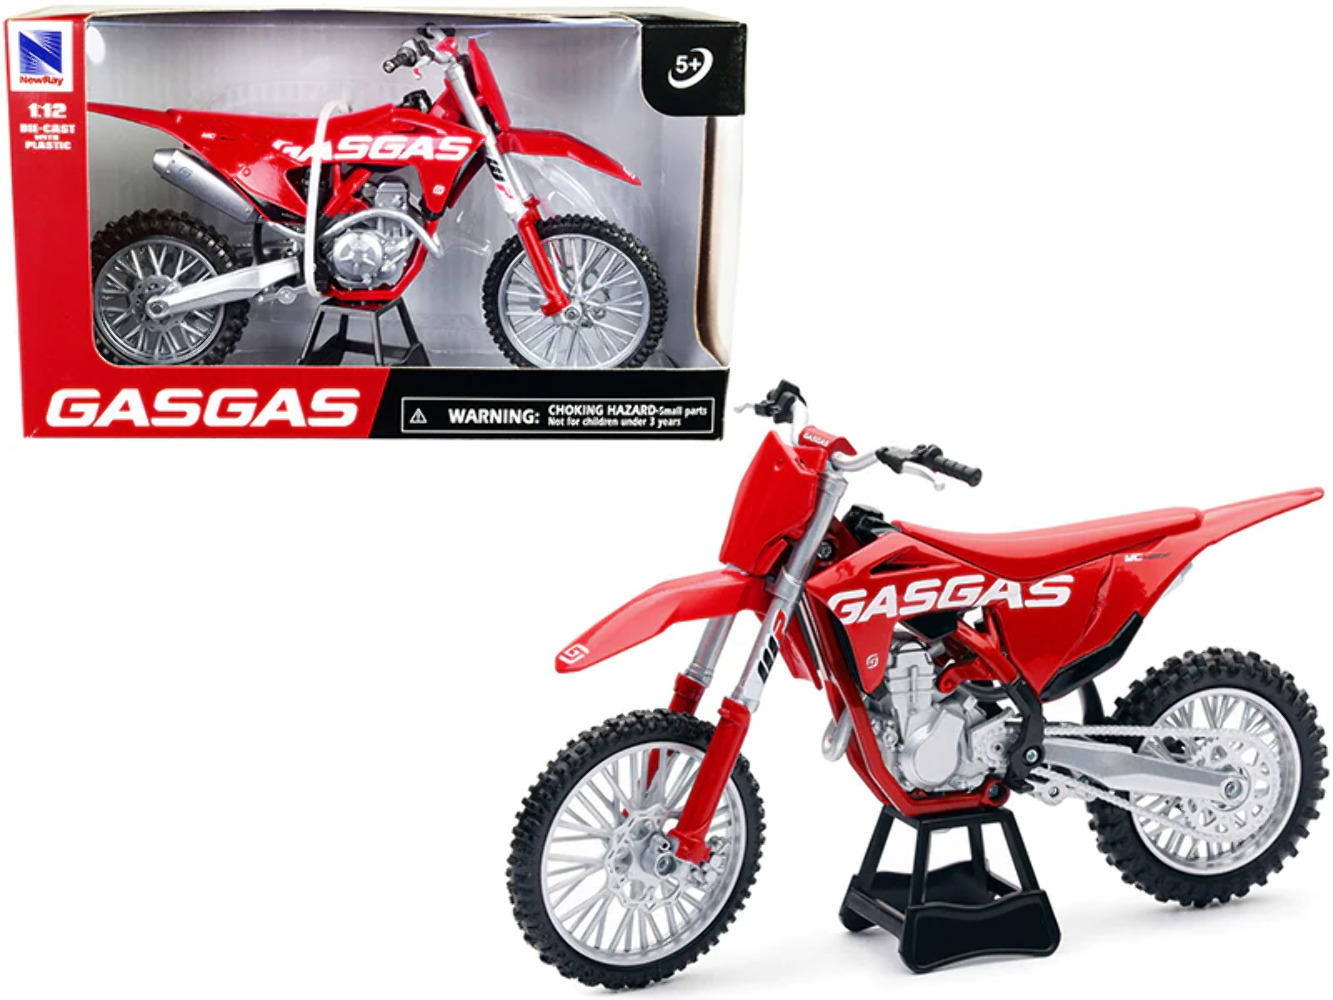 GasGas MC 450F Bike Motorcycle Red 1/12 Diecast Model